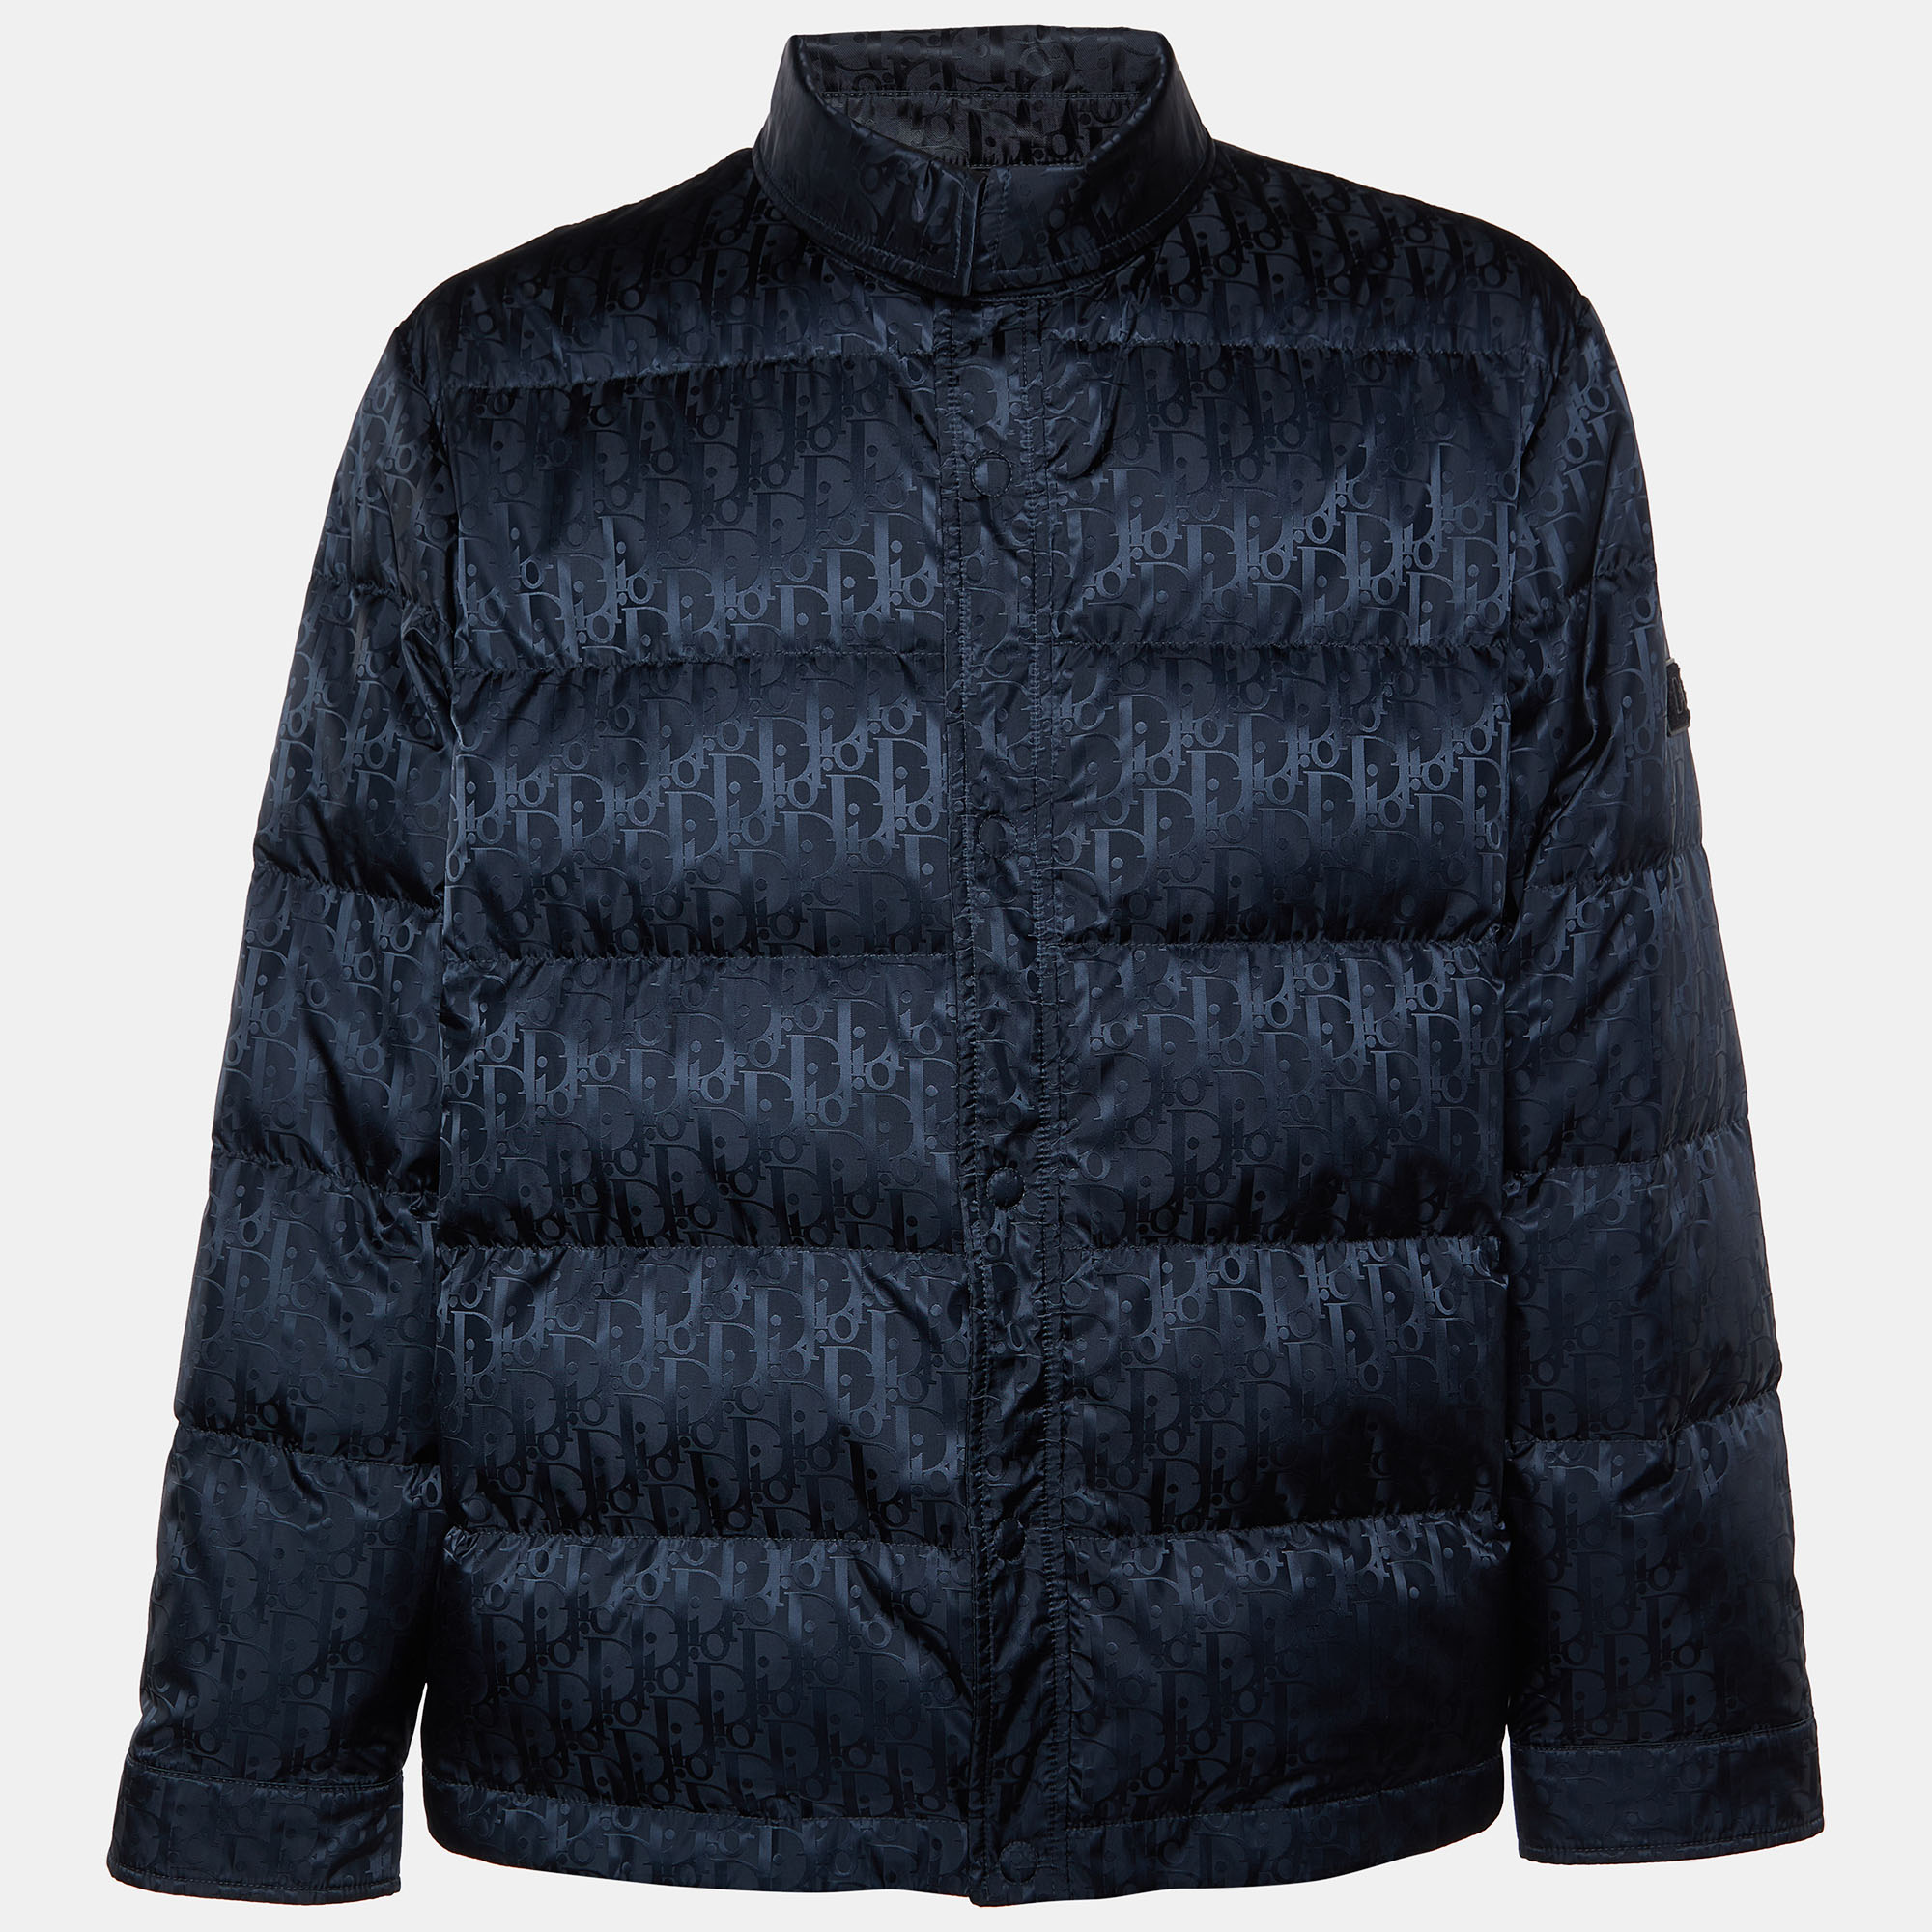 

Dior Homme Black Oblique Technical Jacquard Quilted Jacket XXL